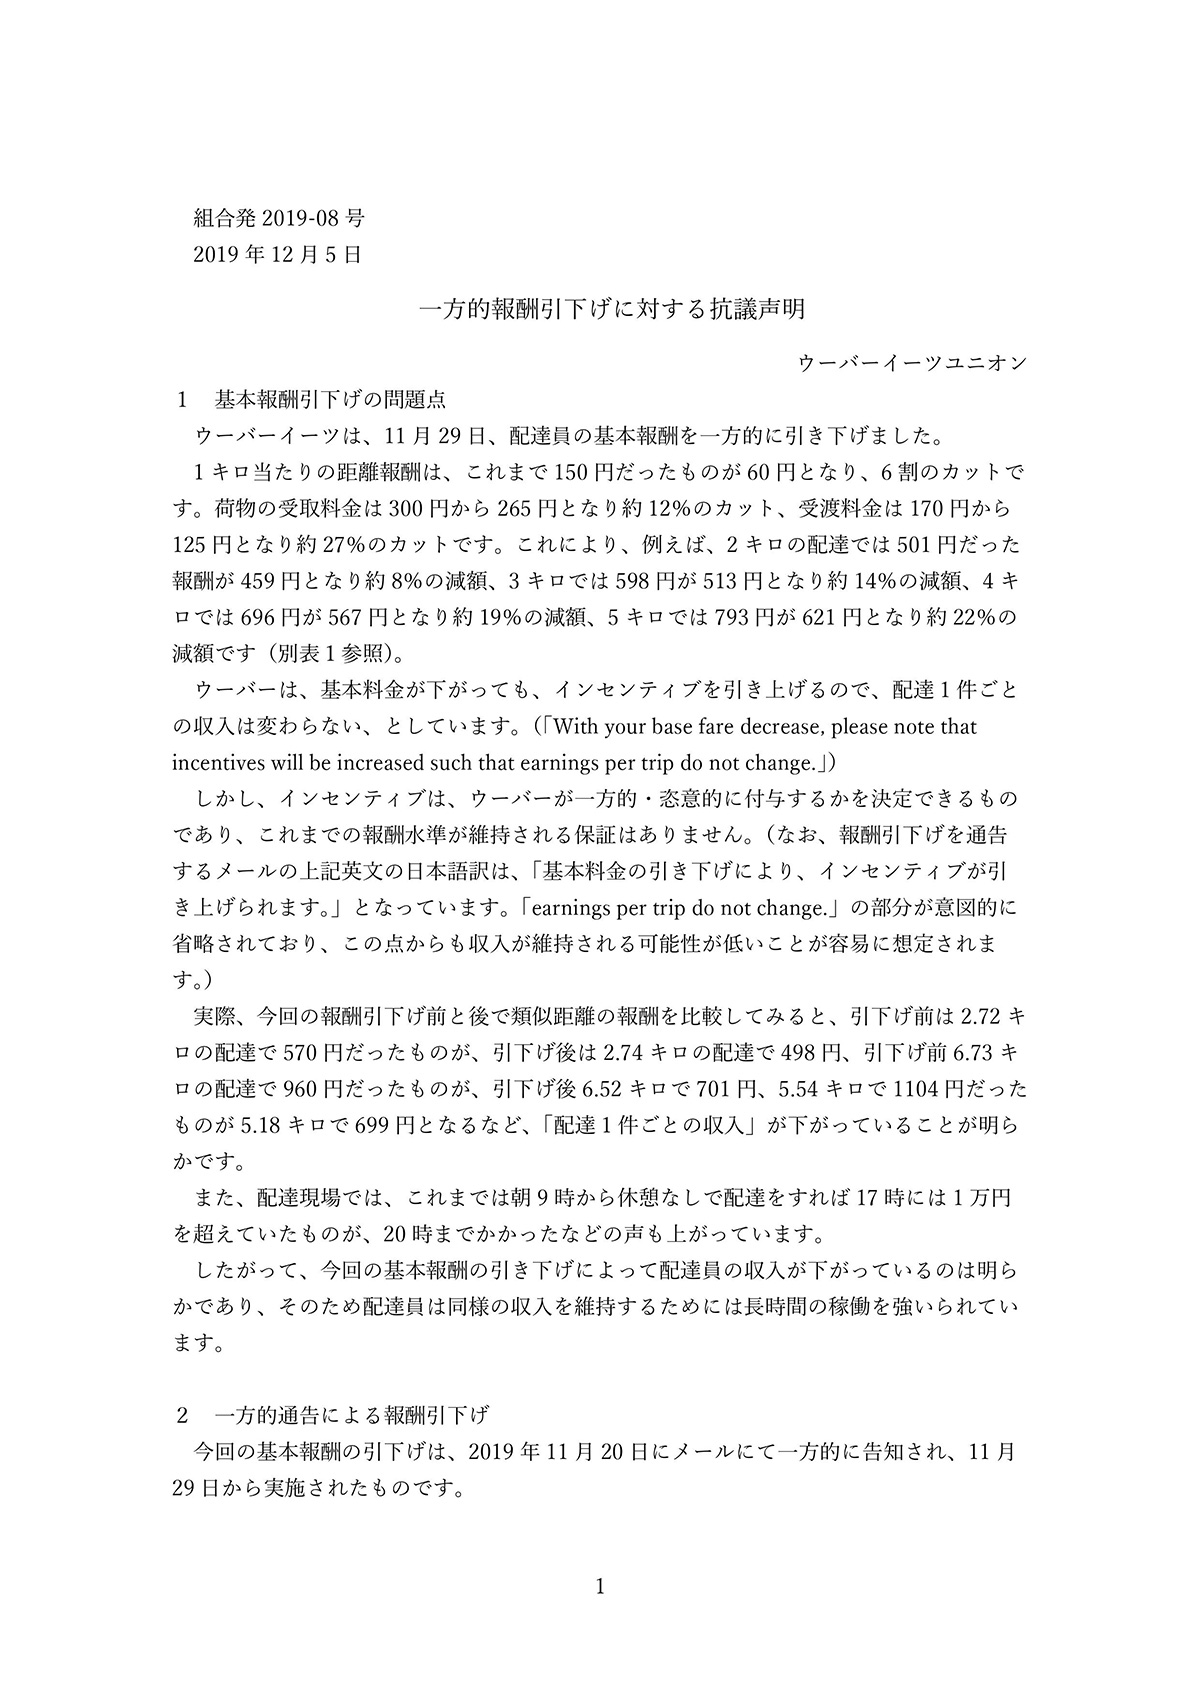 東京地域の配送料改定抗議声明の資料